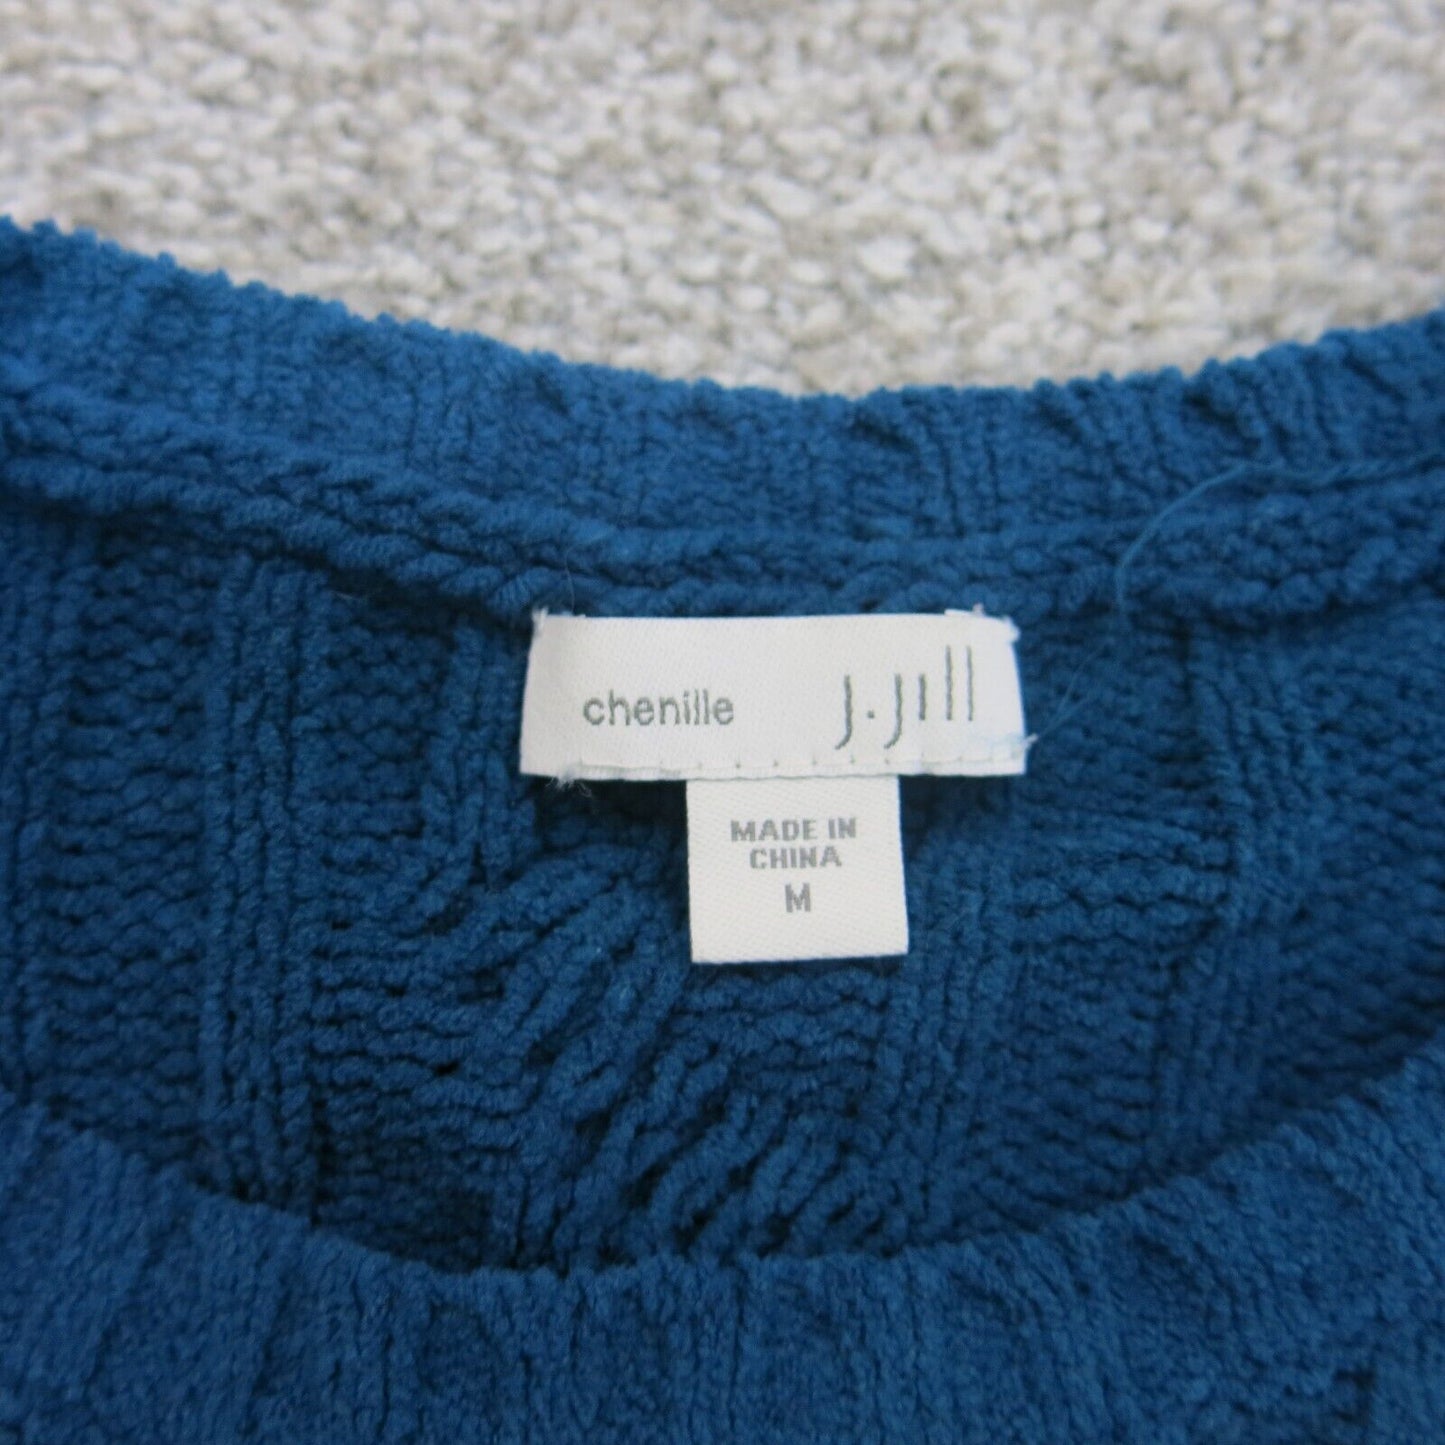 J. Jill Women Knitted Pullover Sweater Long Sleeves Round Neck Blue Size Medium